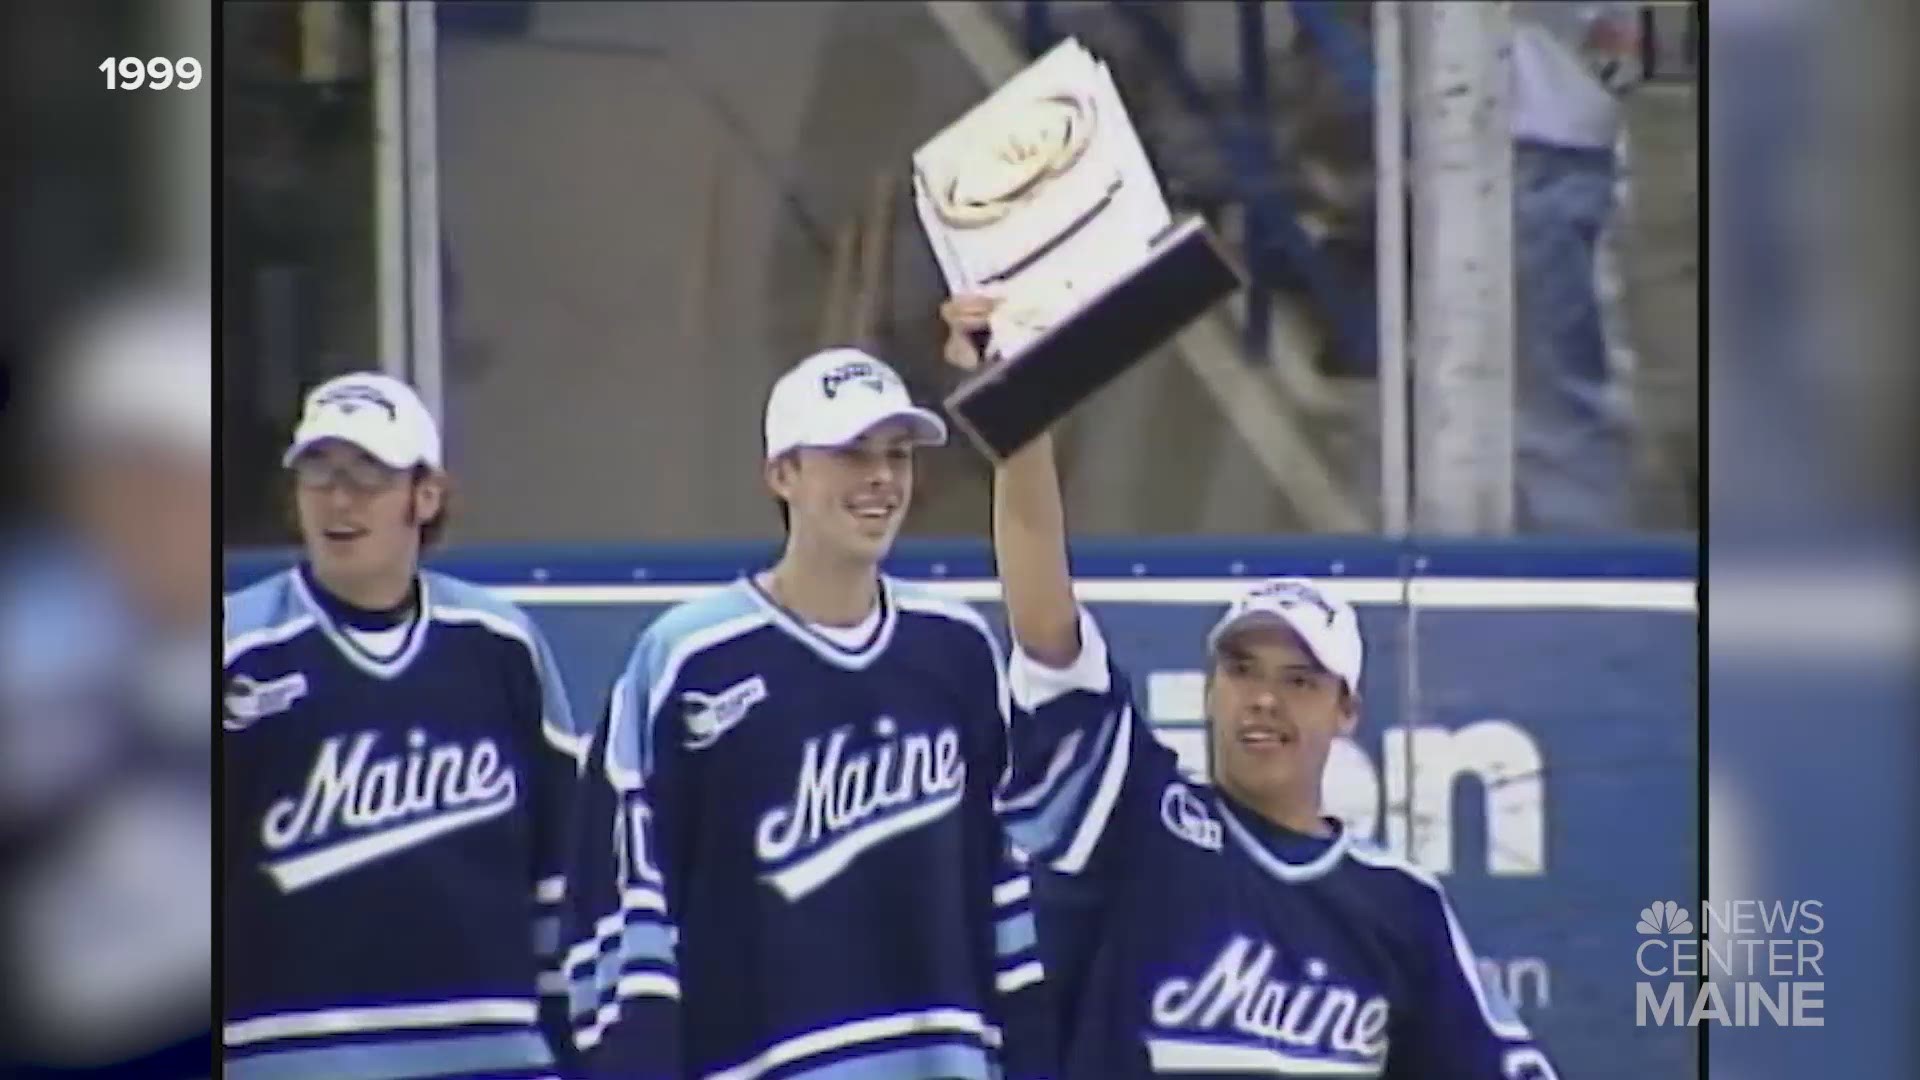 UMaine hockey team holds on-ice celebration - April 6, 1999